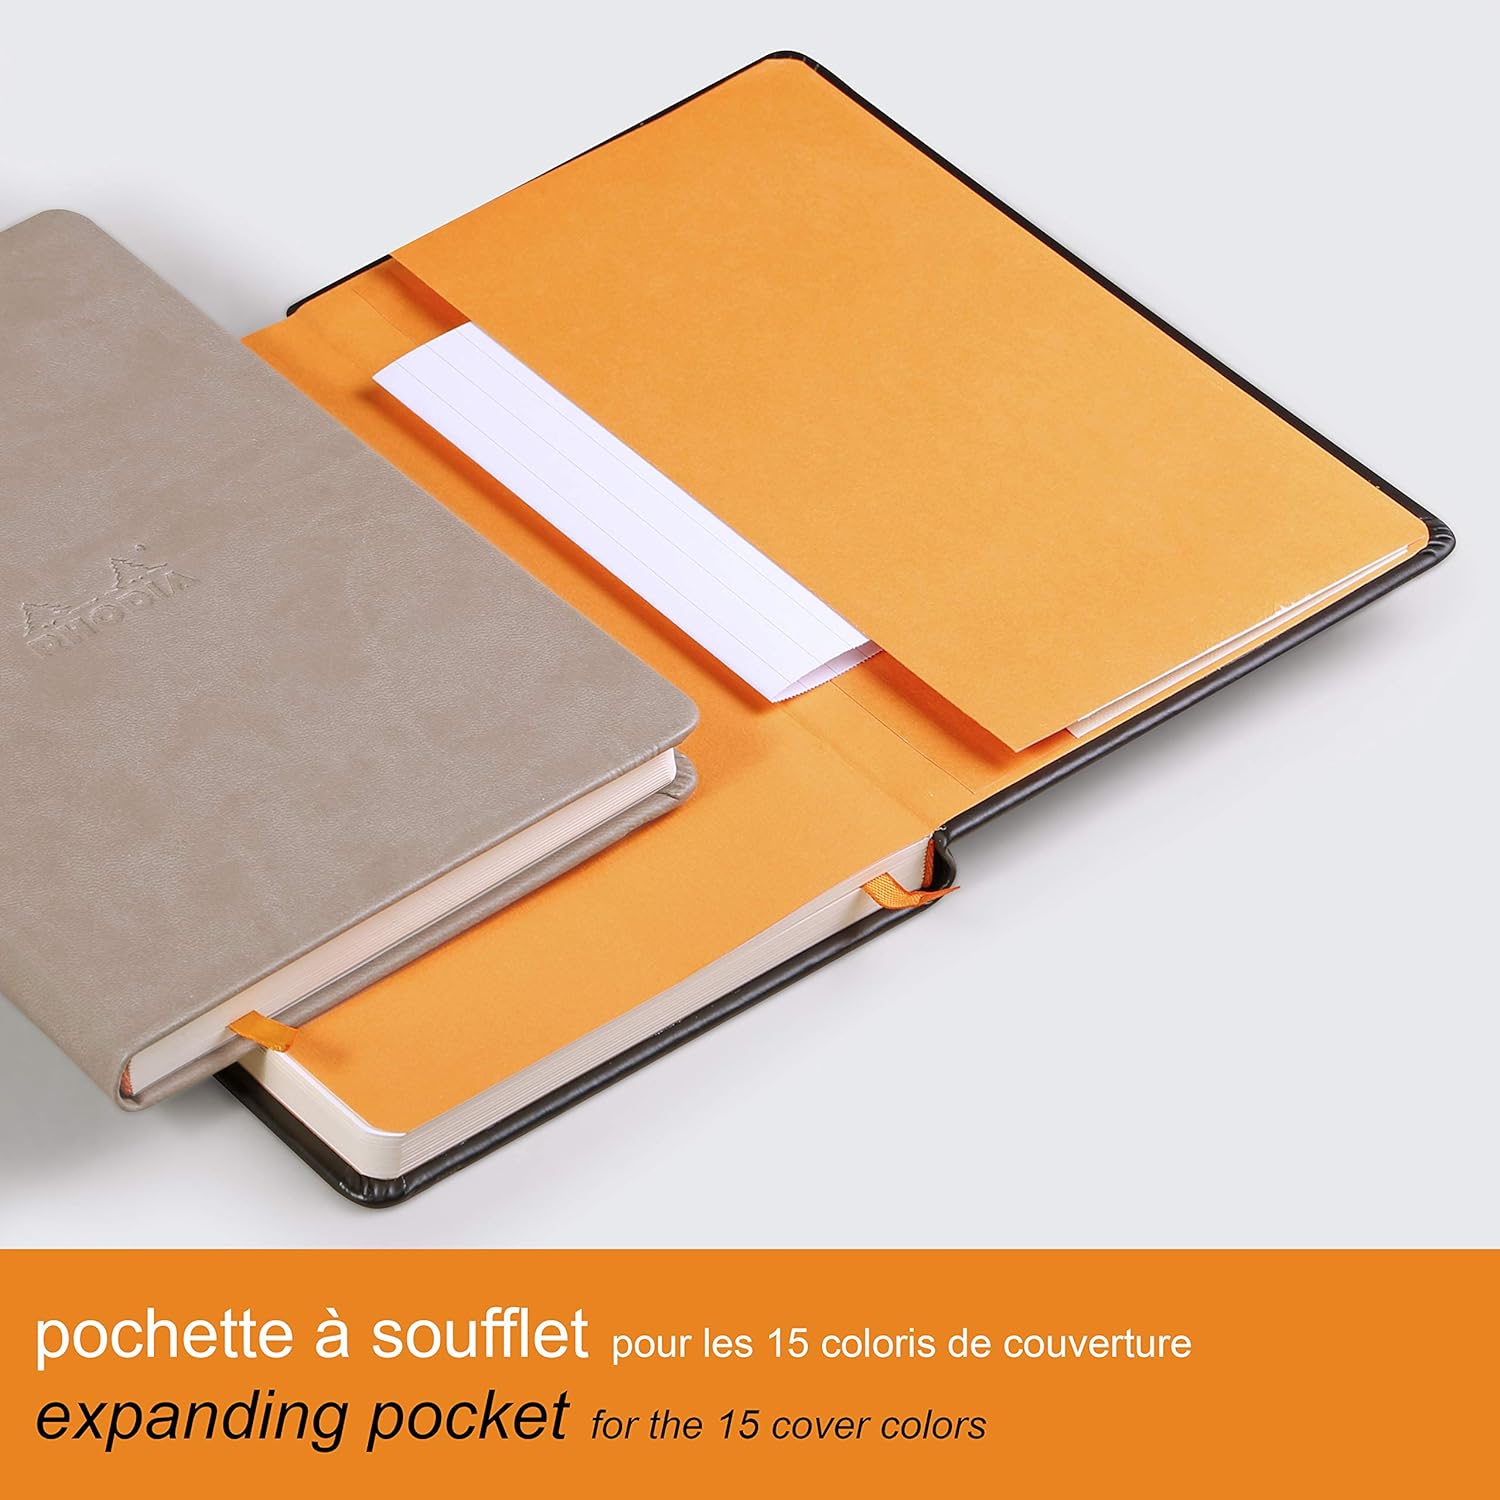 RHODIArama Webnotebook A5 Ivory Lined Hardcover-Orange